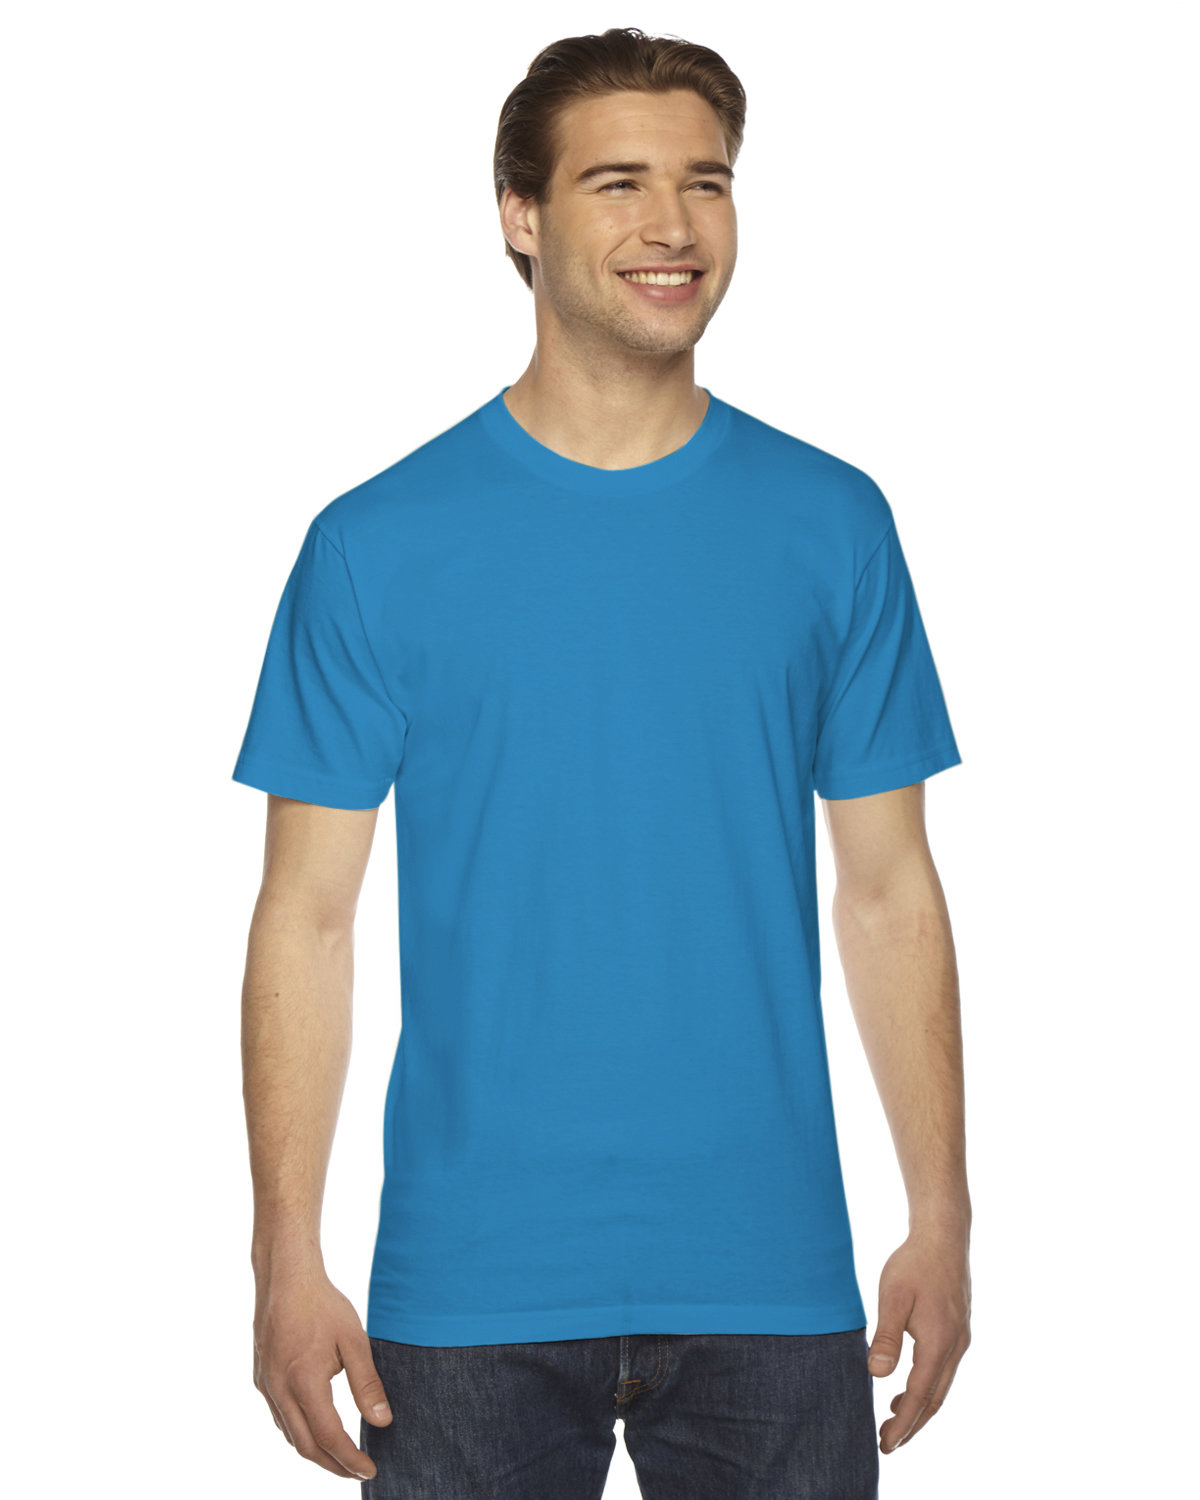 Sweat Shirt Personalizada- Felpa Americana - Unisexo - Lousãtextil